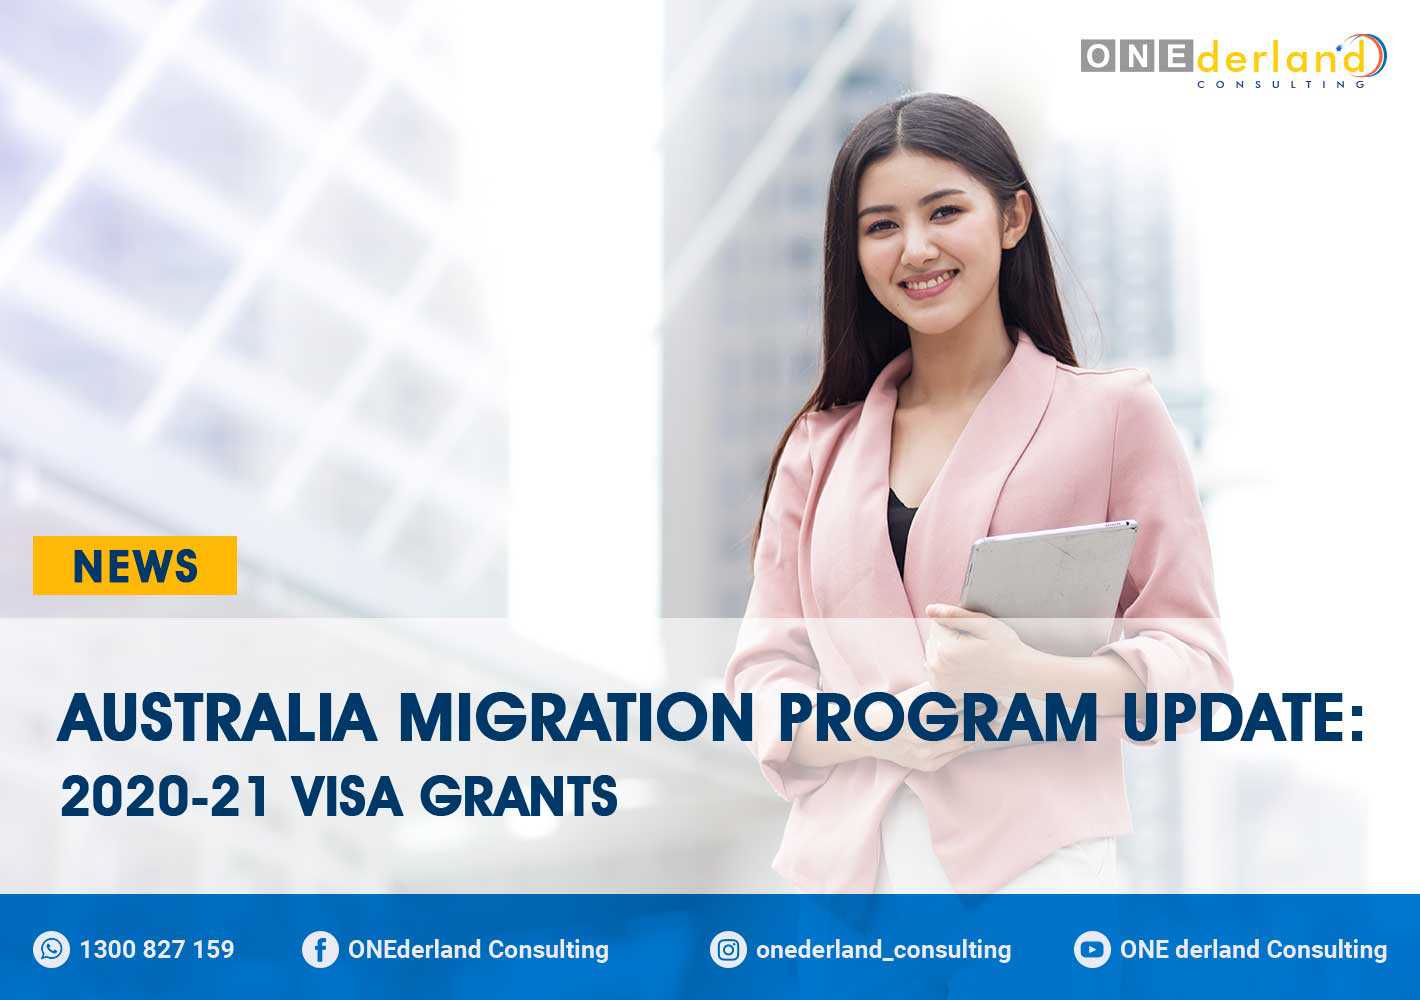 2020-21 Australia Migration Program Year Visa Grants: 160,052 Places Has Been Given